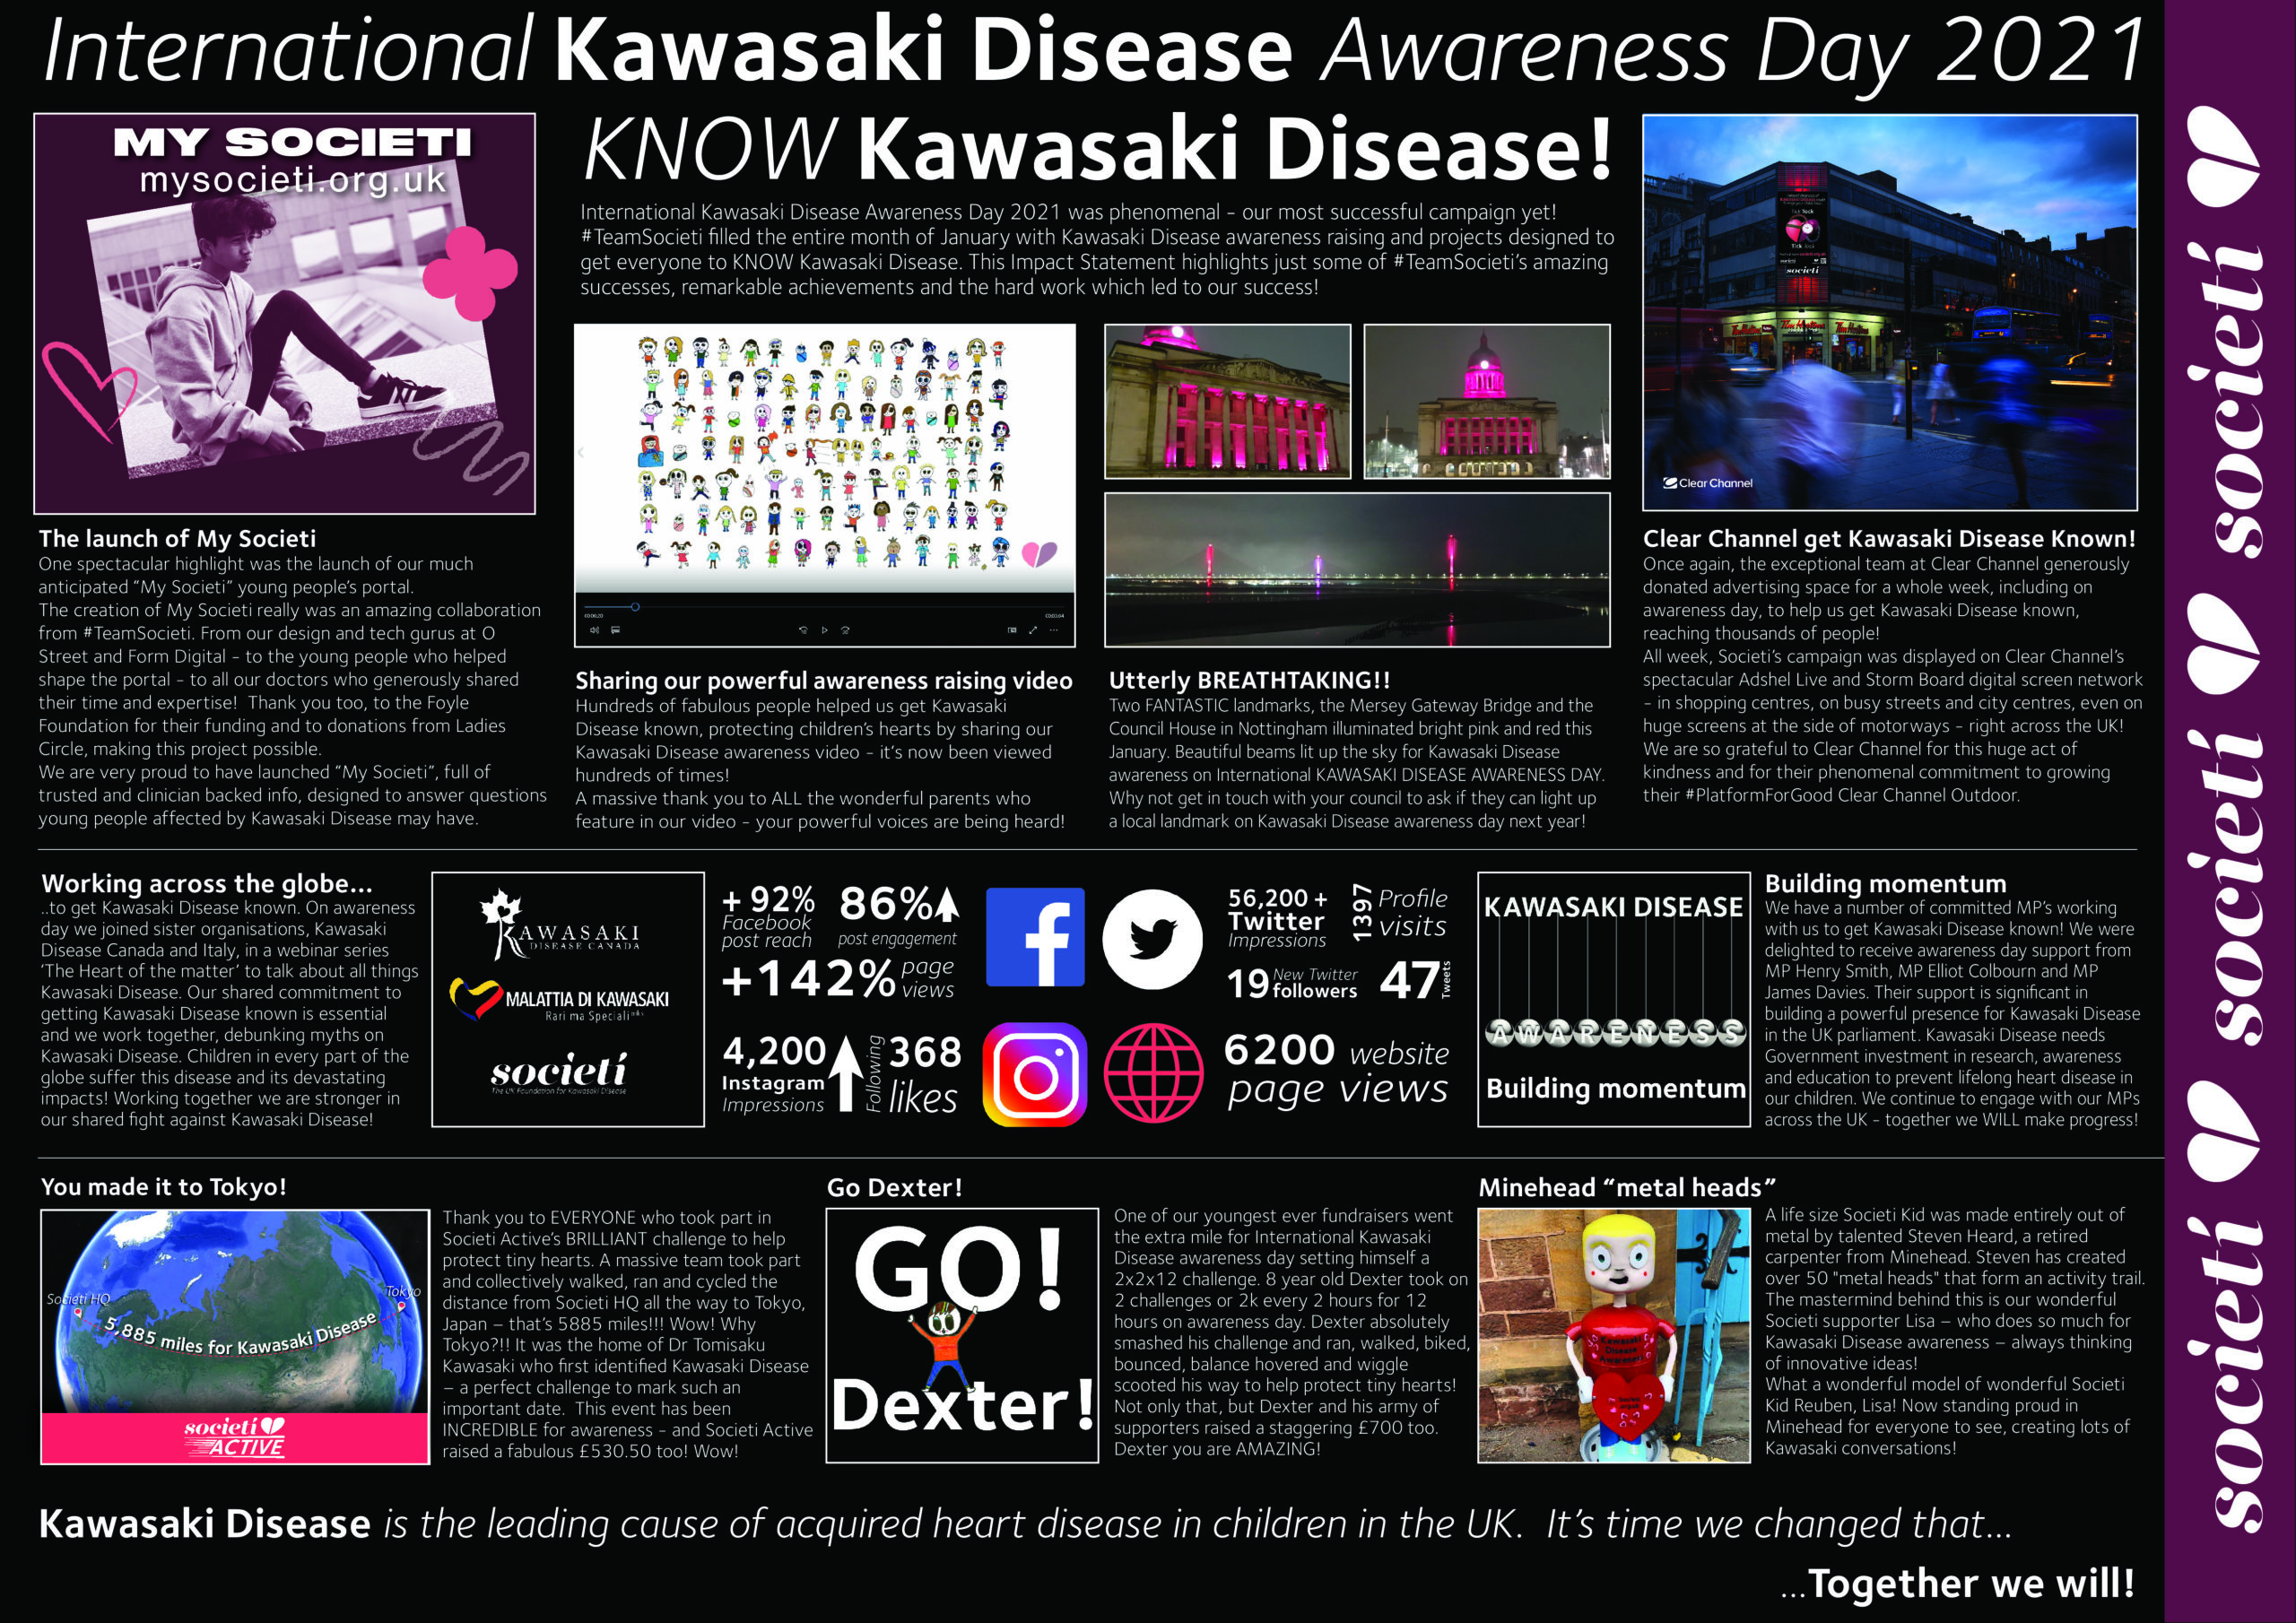 International Kawasaki Disease Awareness Day 2021 Impact Statement